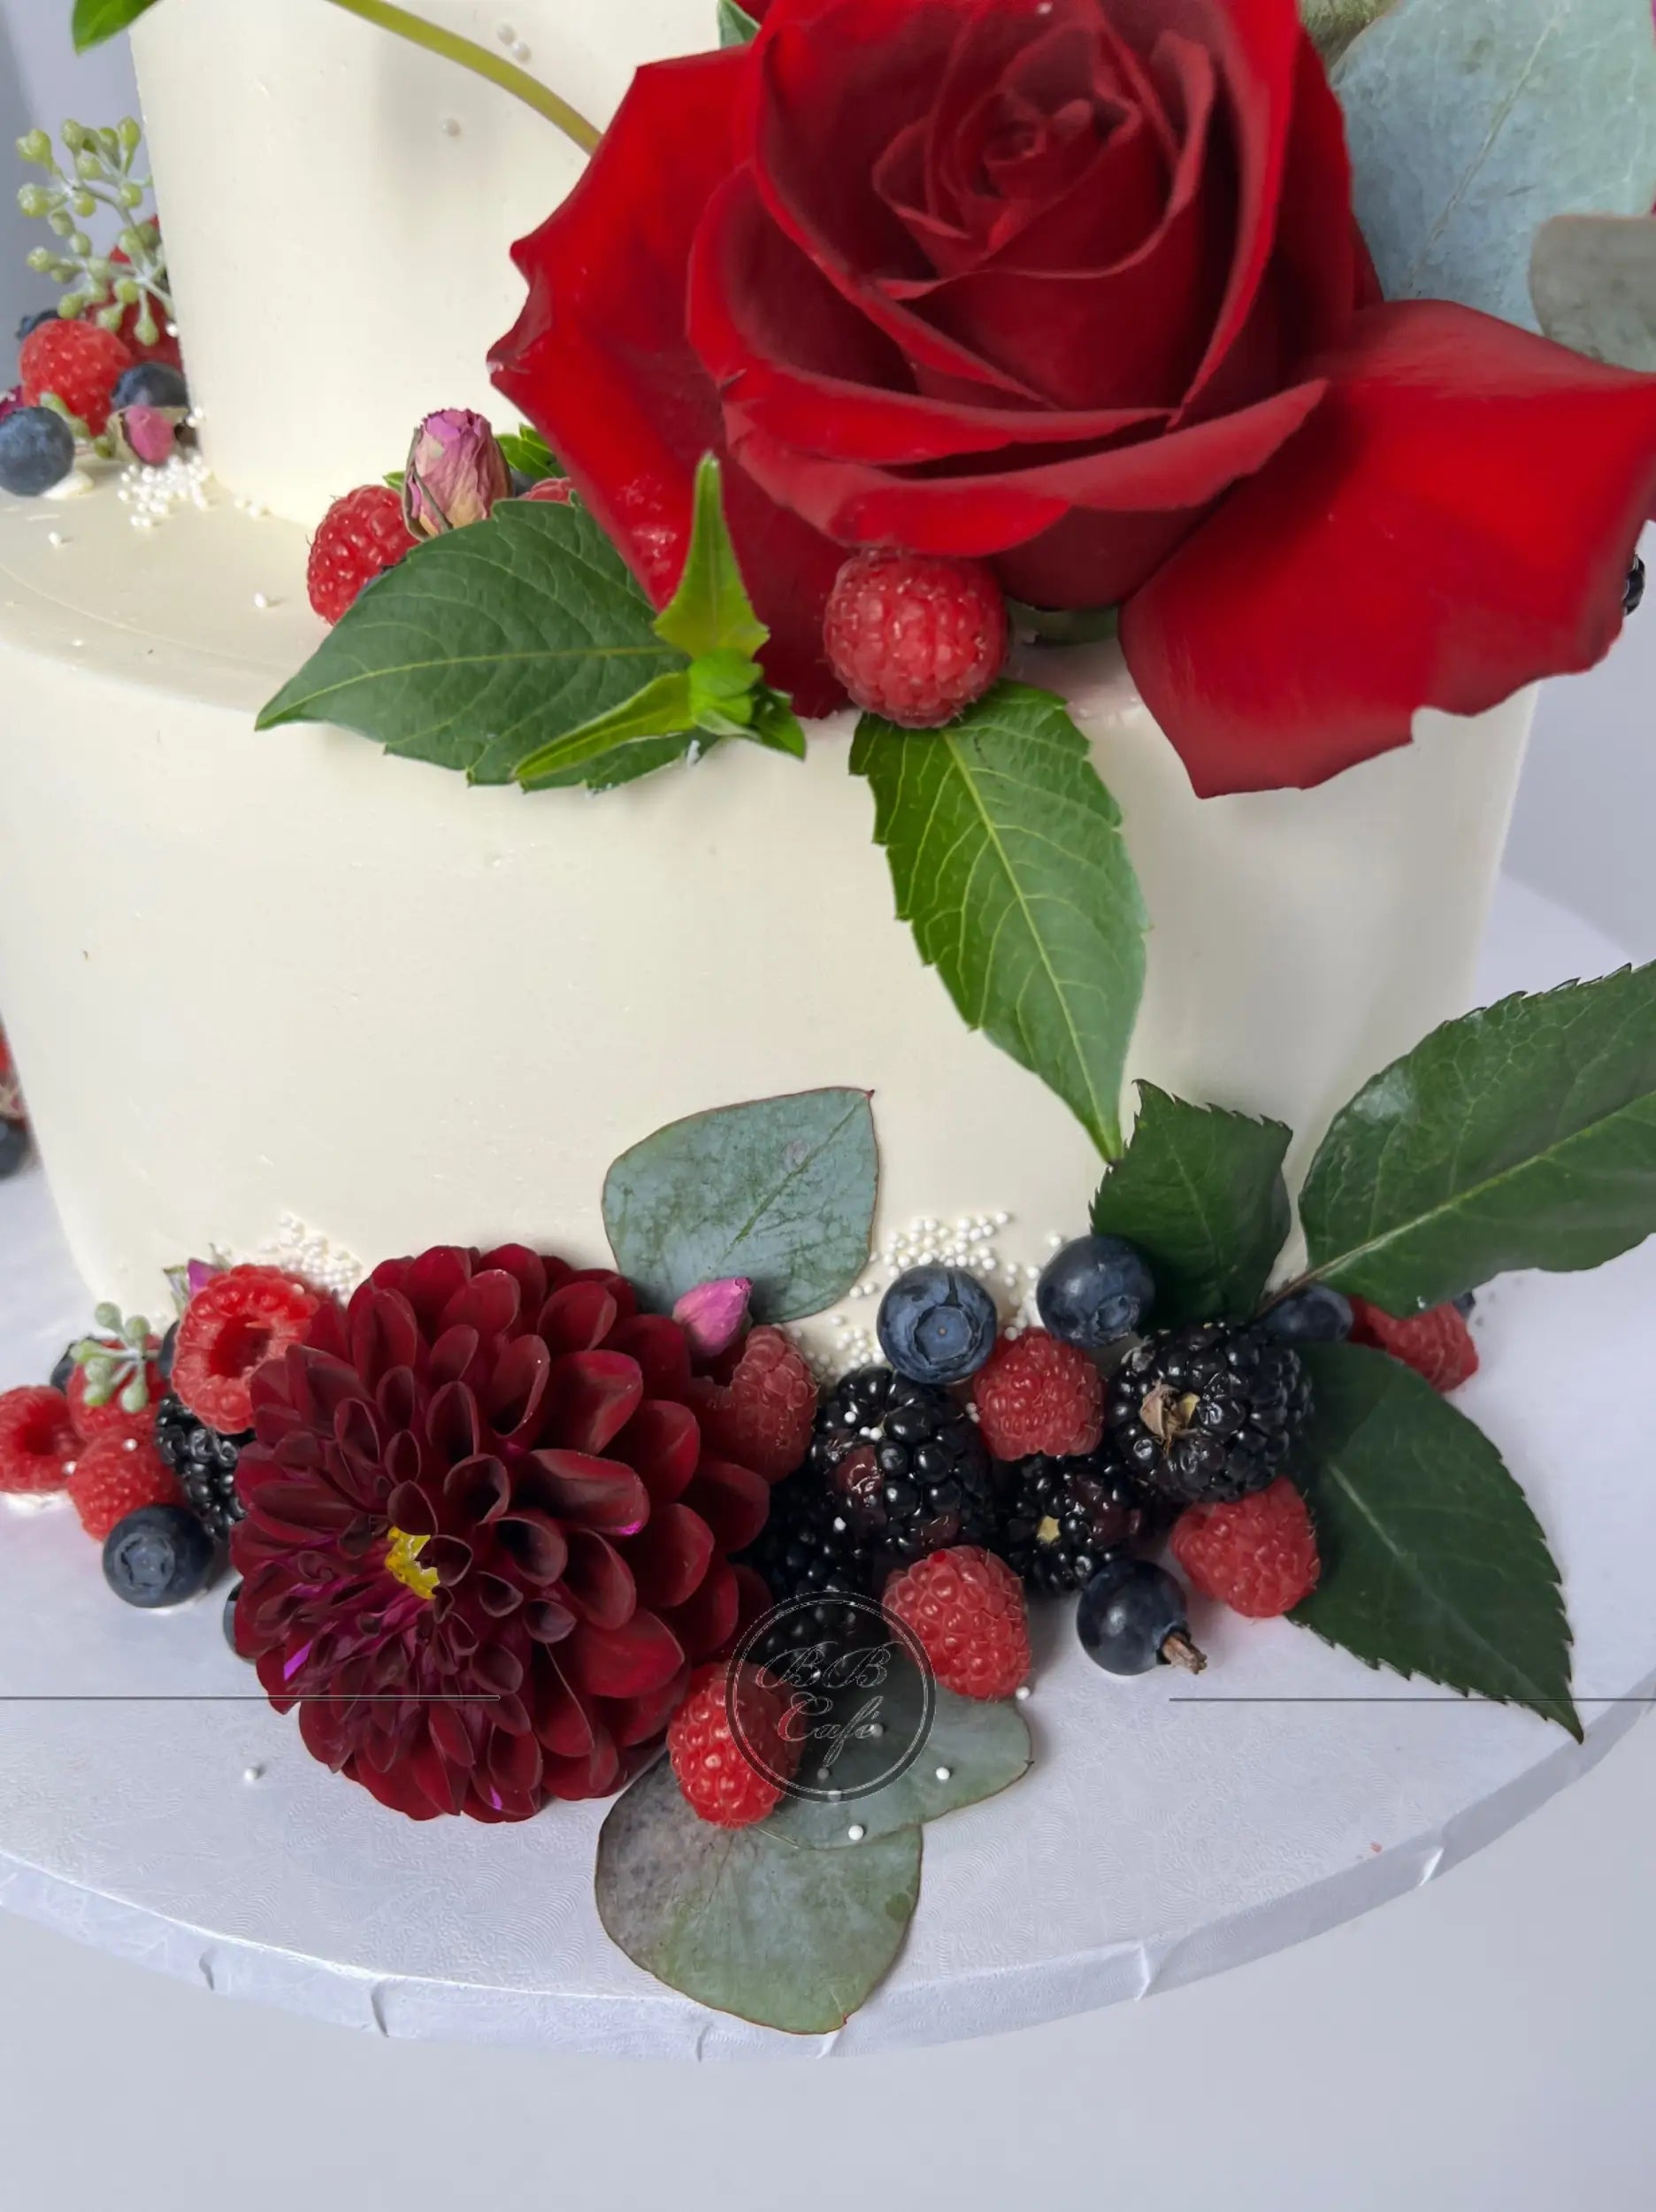 Romance &amp; palette knife - wedding cake